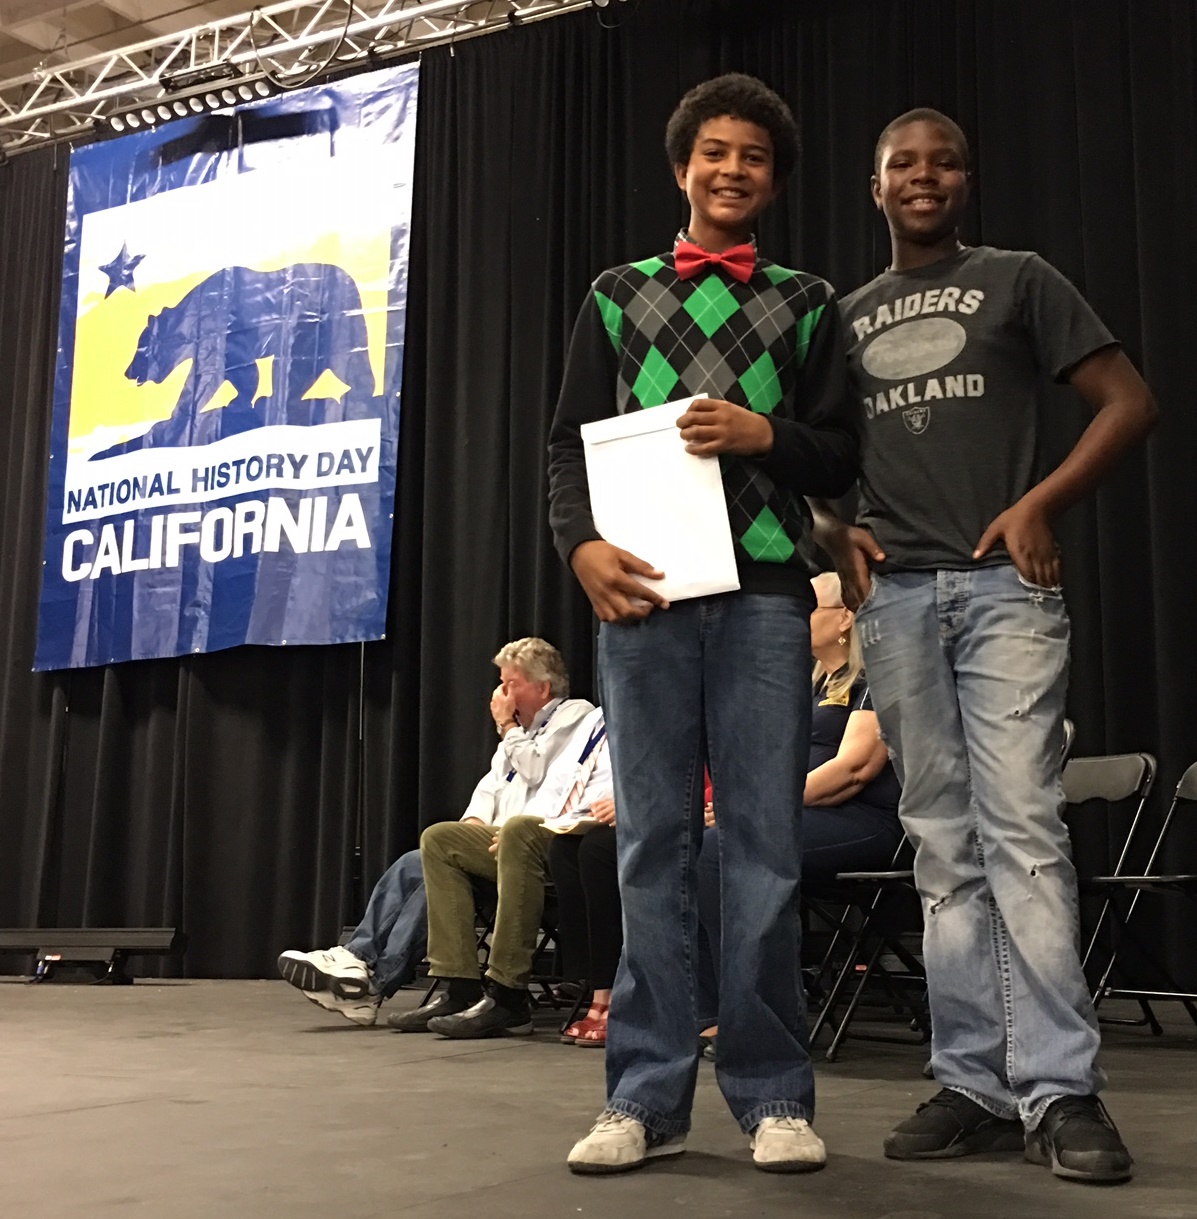 California Junior Winners 2017